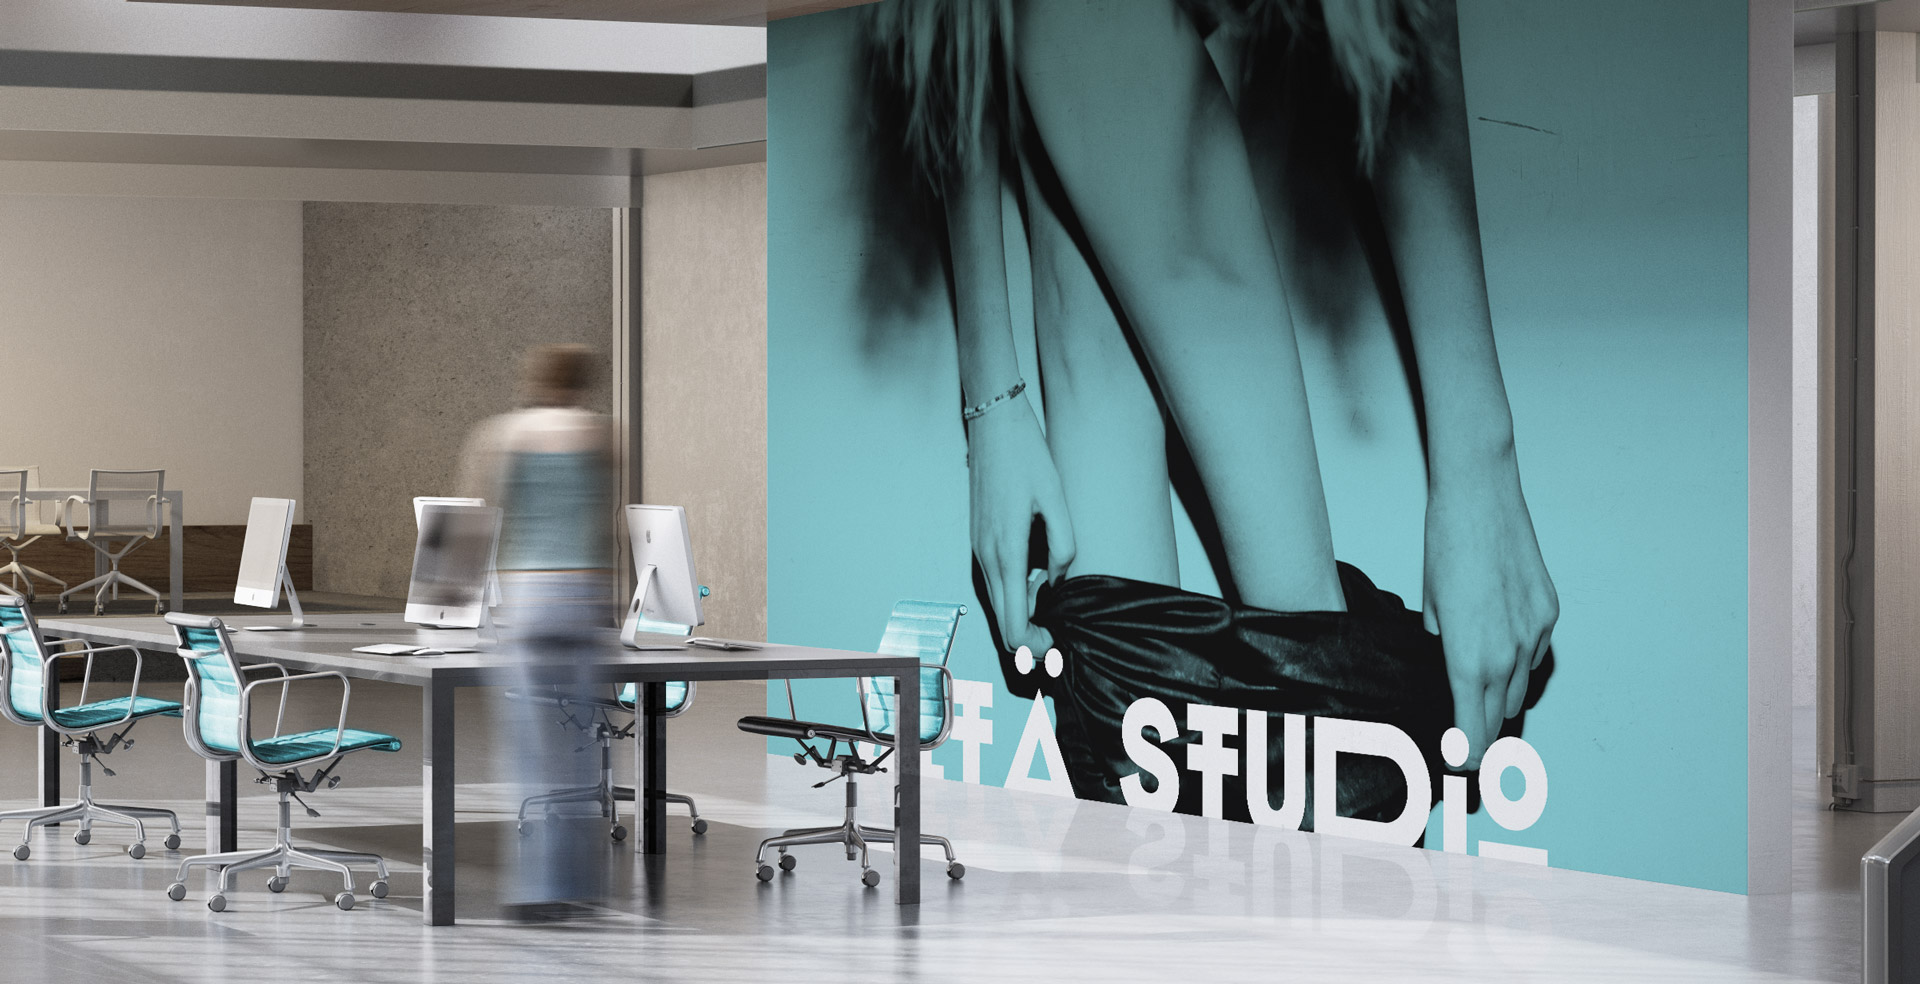 zeta-studio-office-2